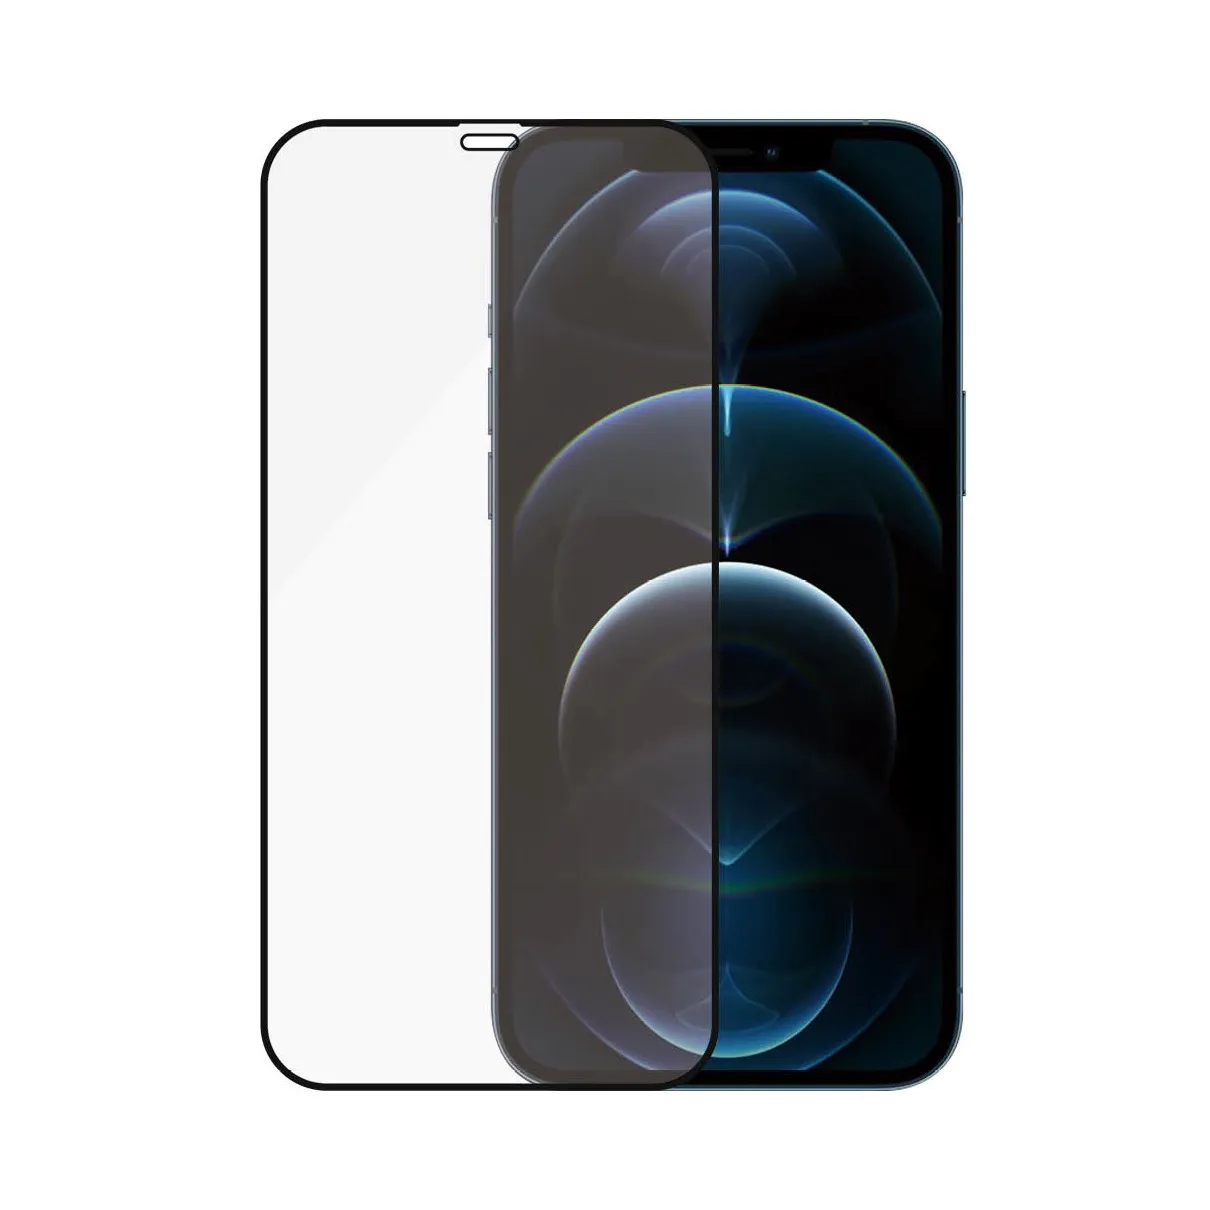 PanzerGlass Apple iPhone 12 Pro Max Case Friendly AB Zwart